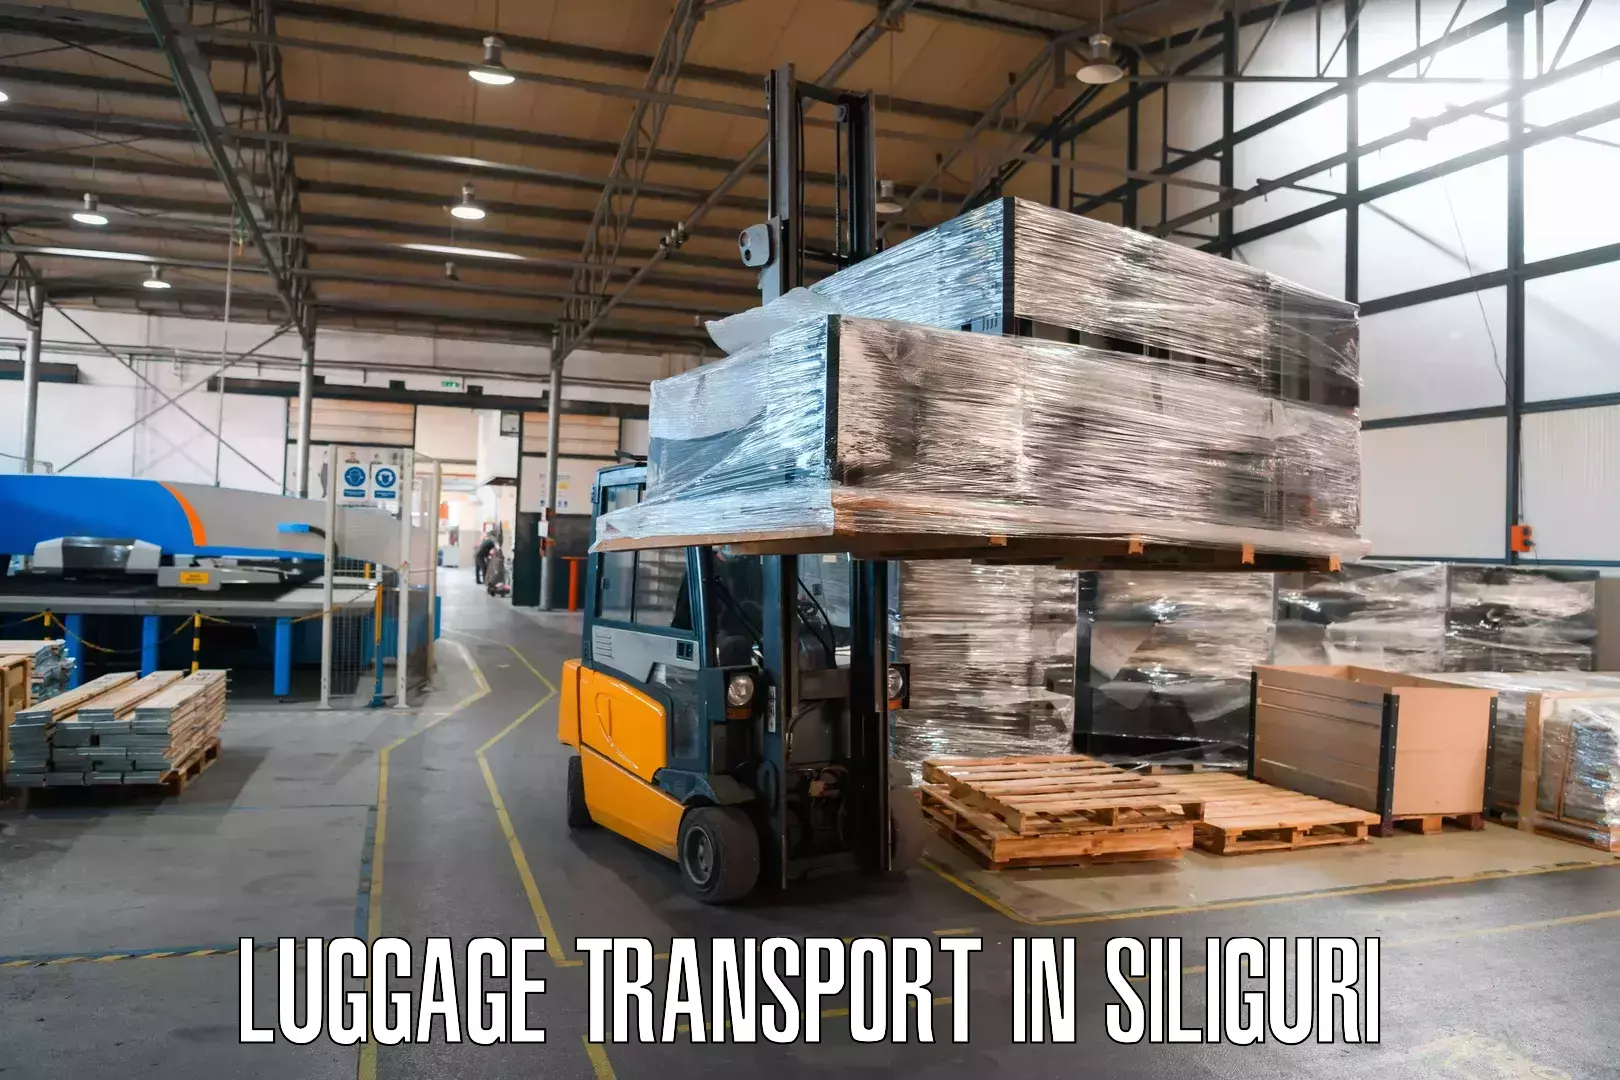 Baggage transport quote in Siliguri